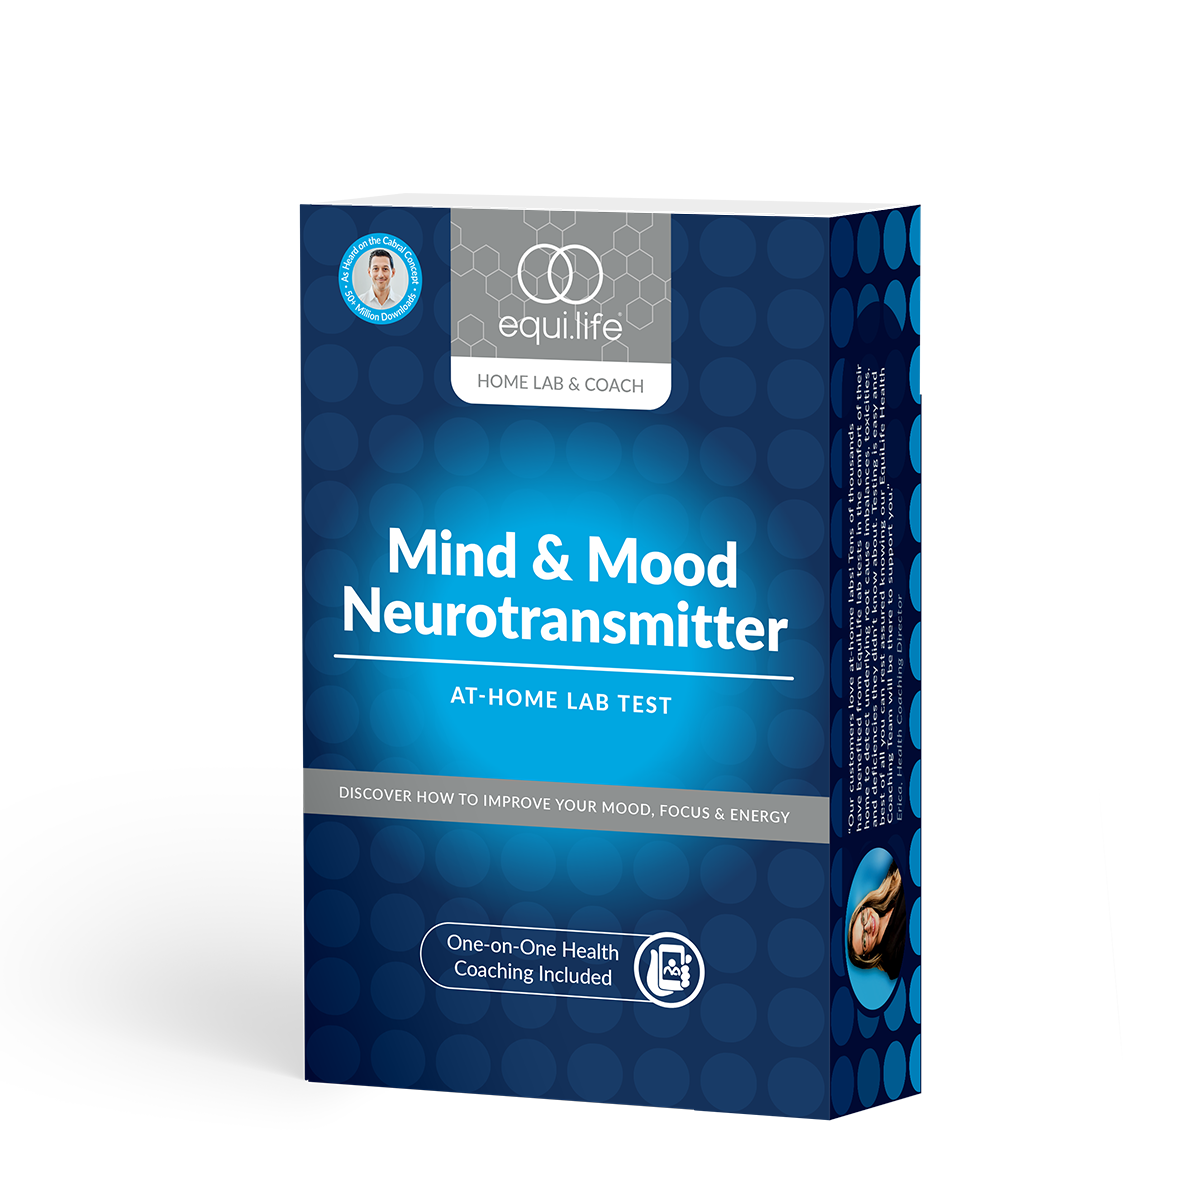 Mood & Mind Neurotransmitter Test